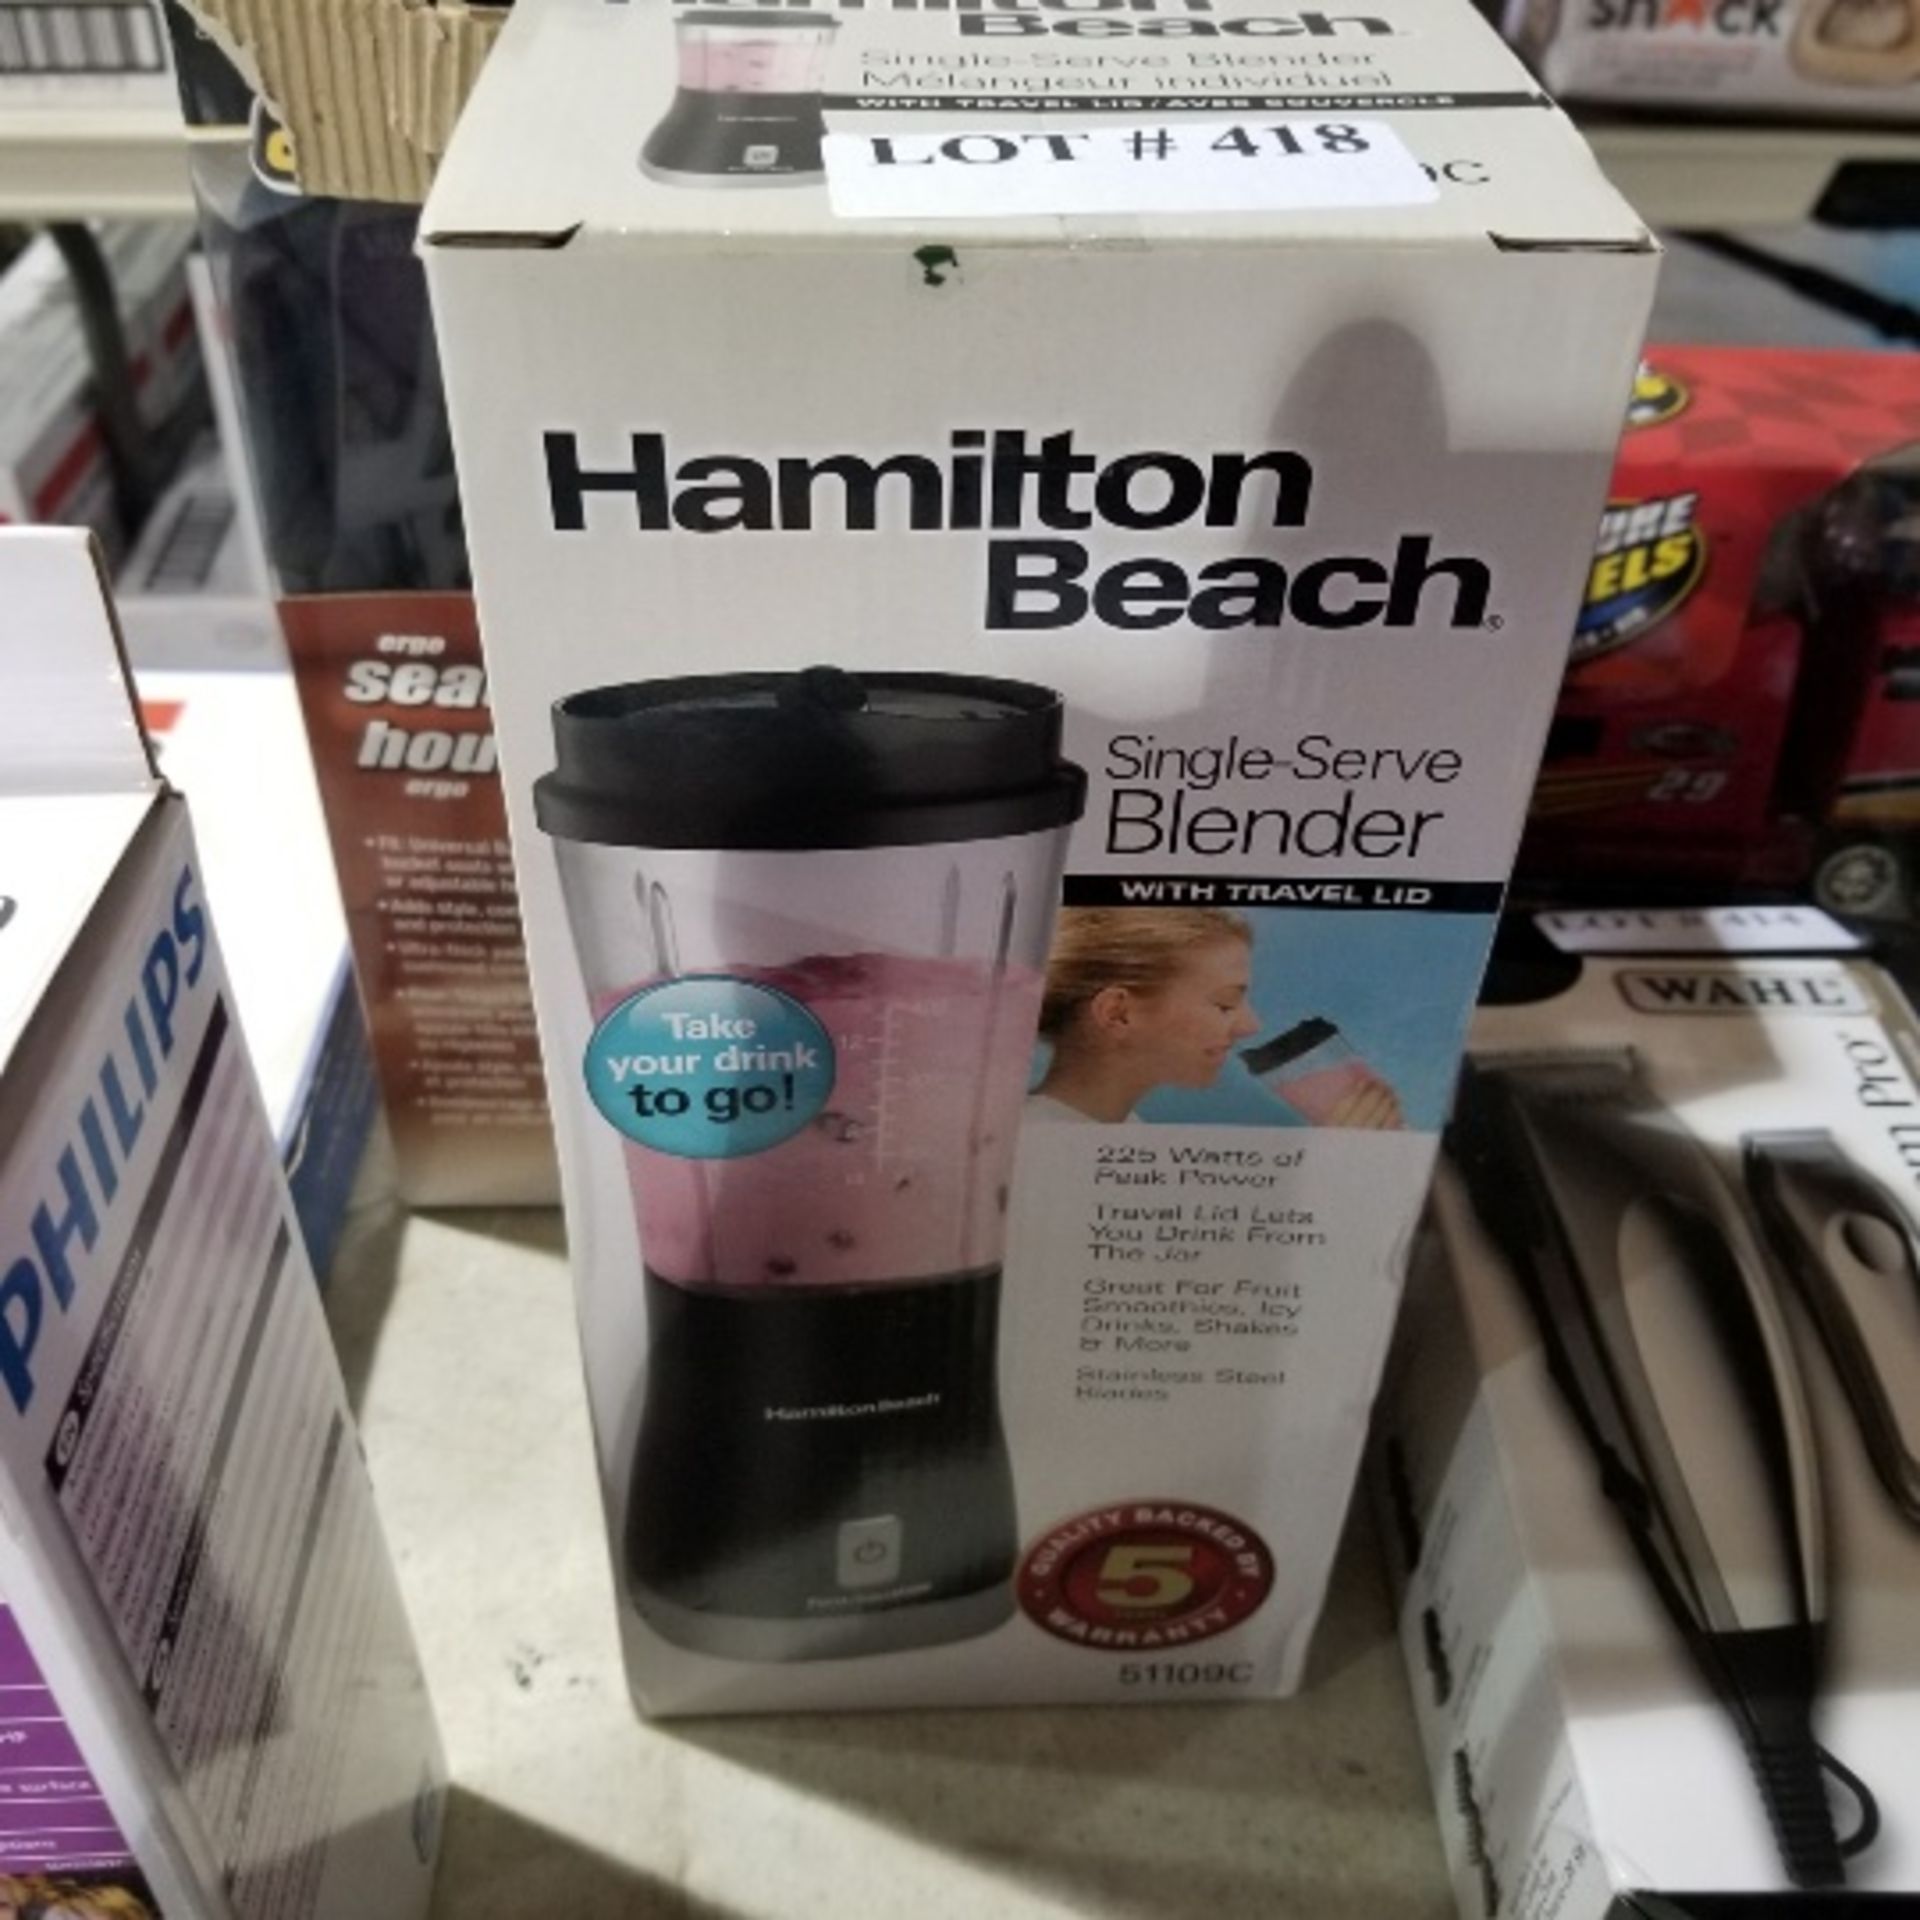 Hamilton Beach single serve blender